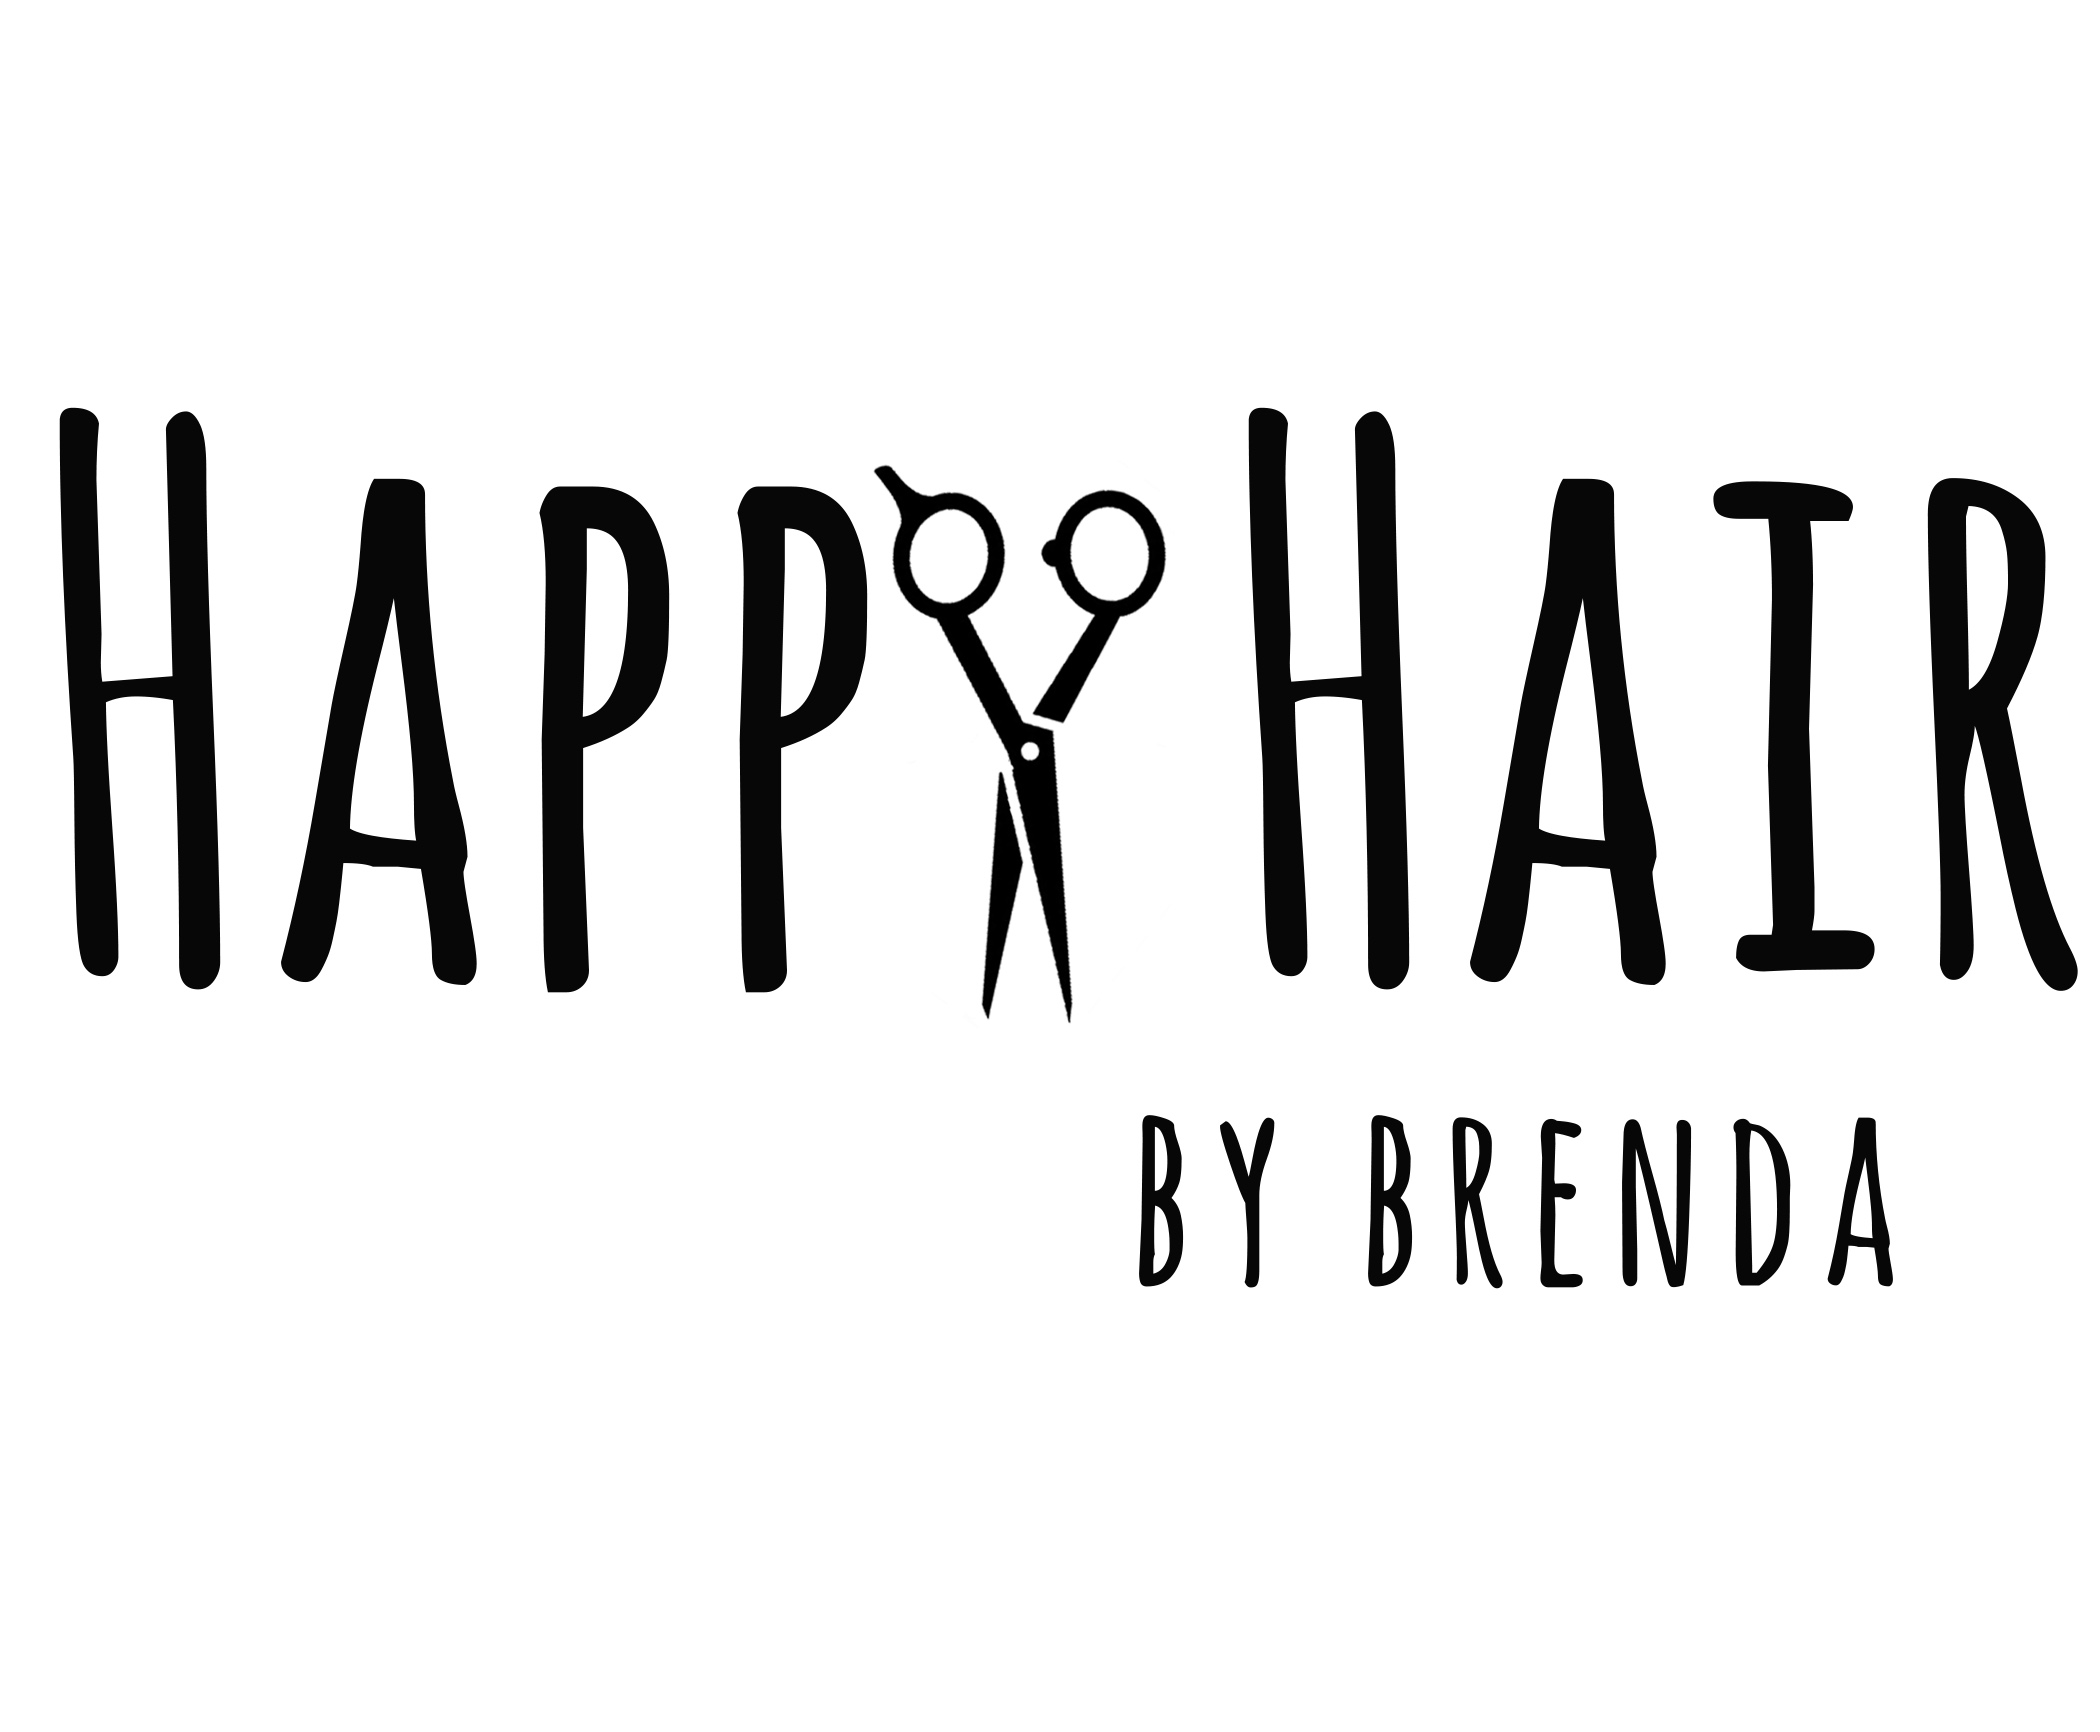 Kapper Hoofddorp - Kapsalon Happy Hair by Brenda